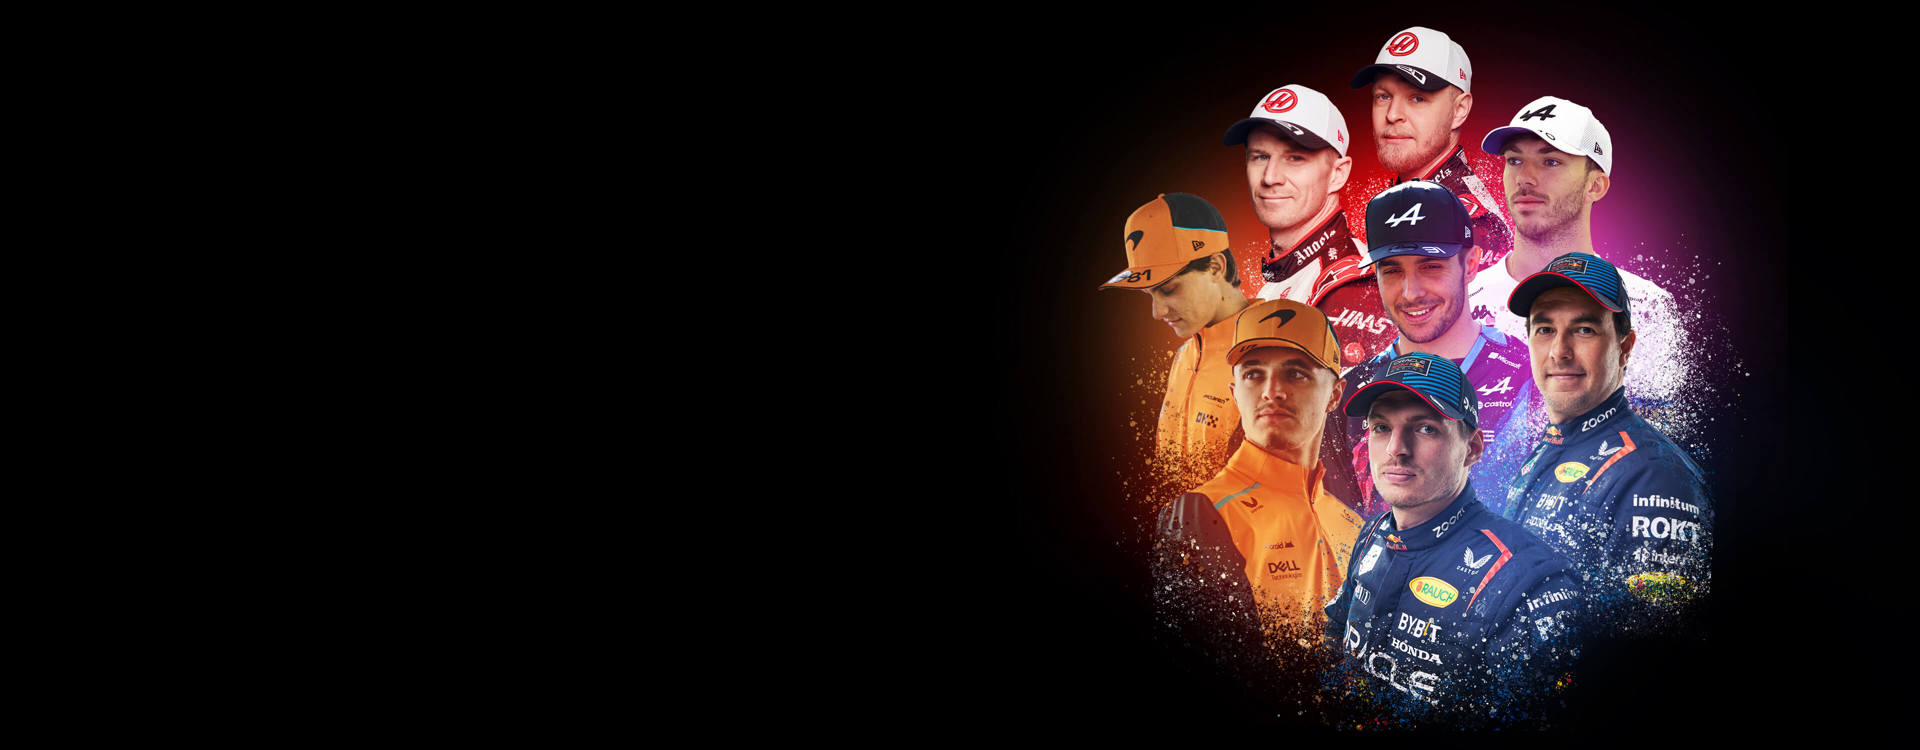 motorsport drivers wearing new era branded caps